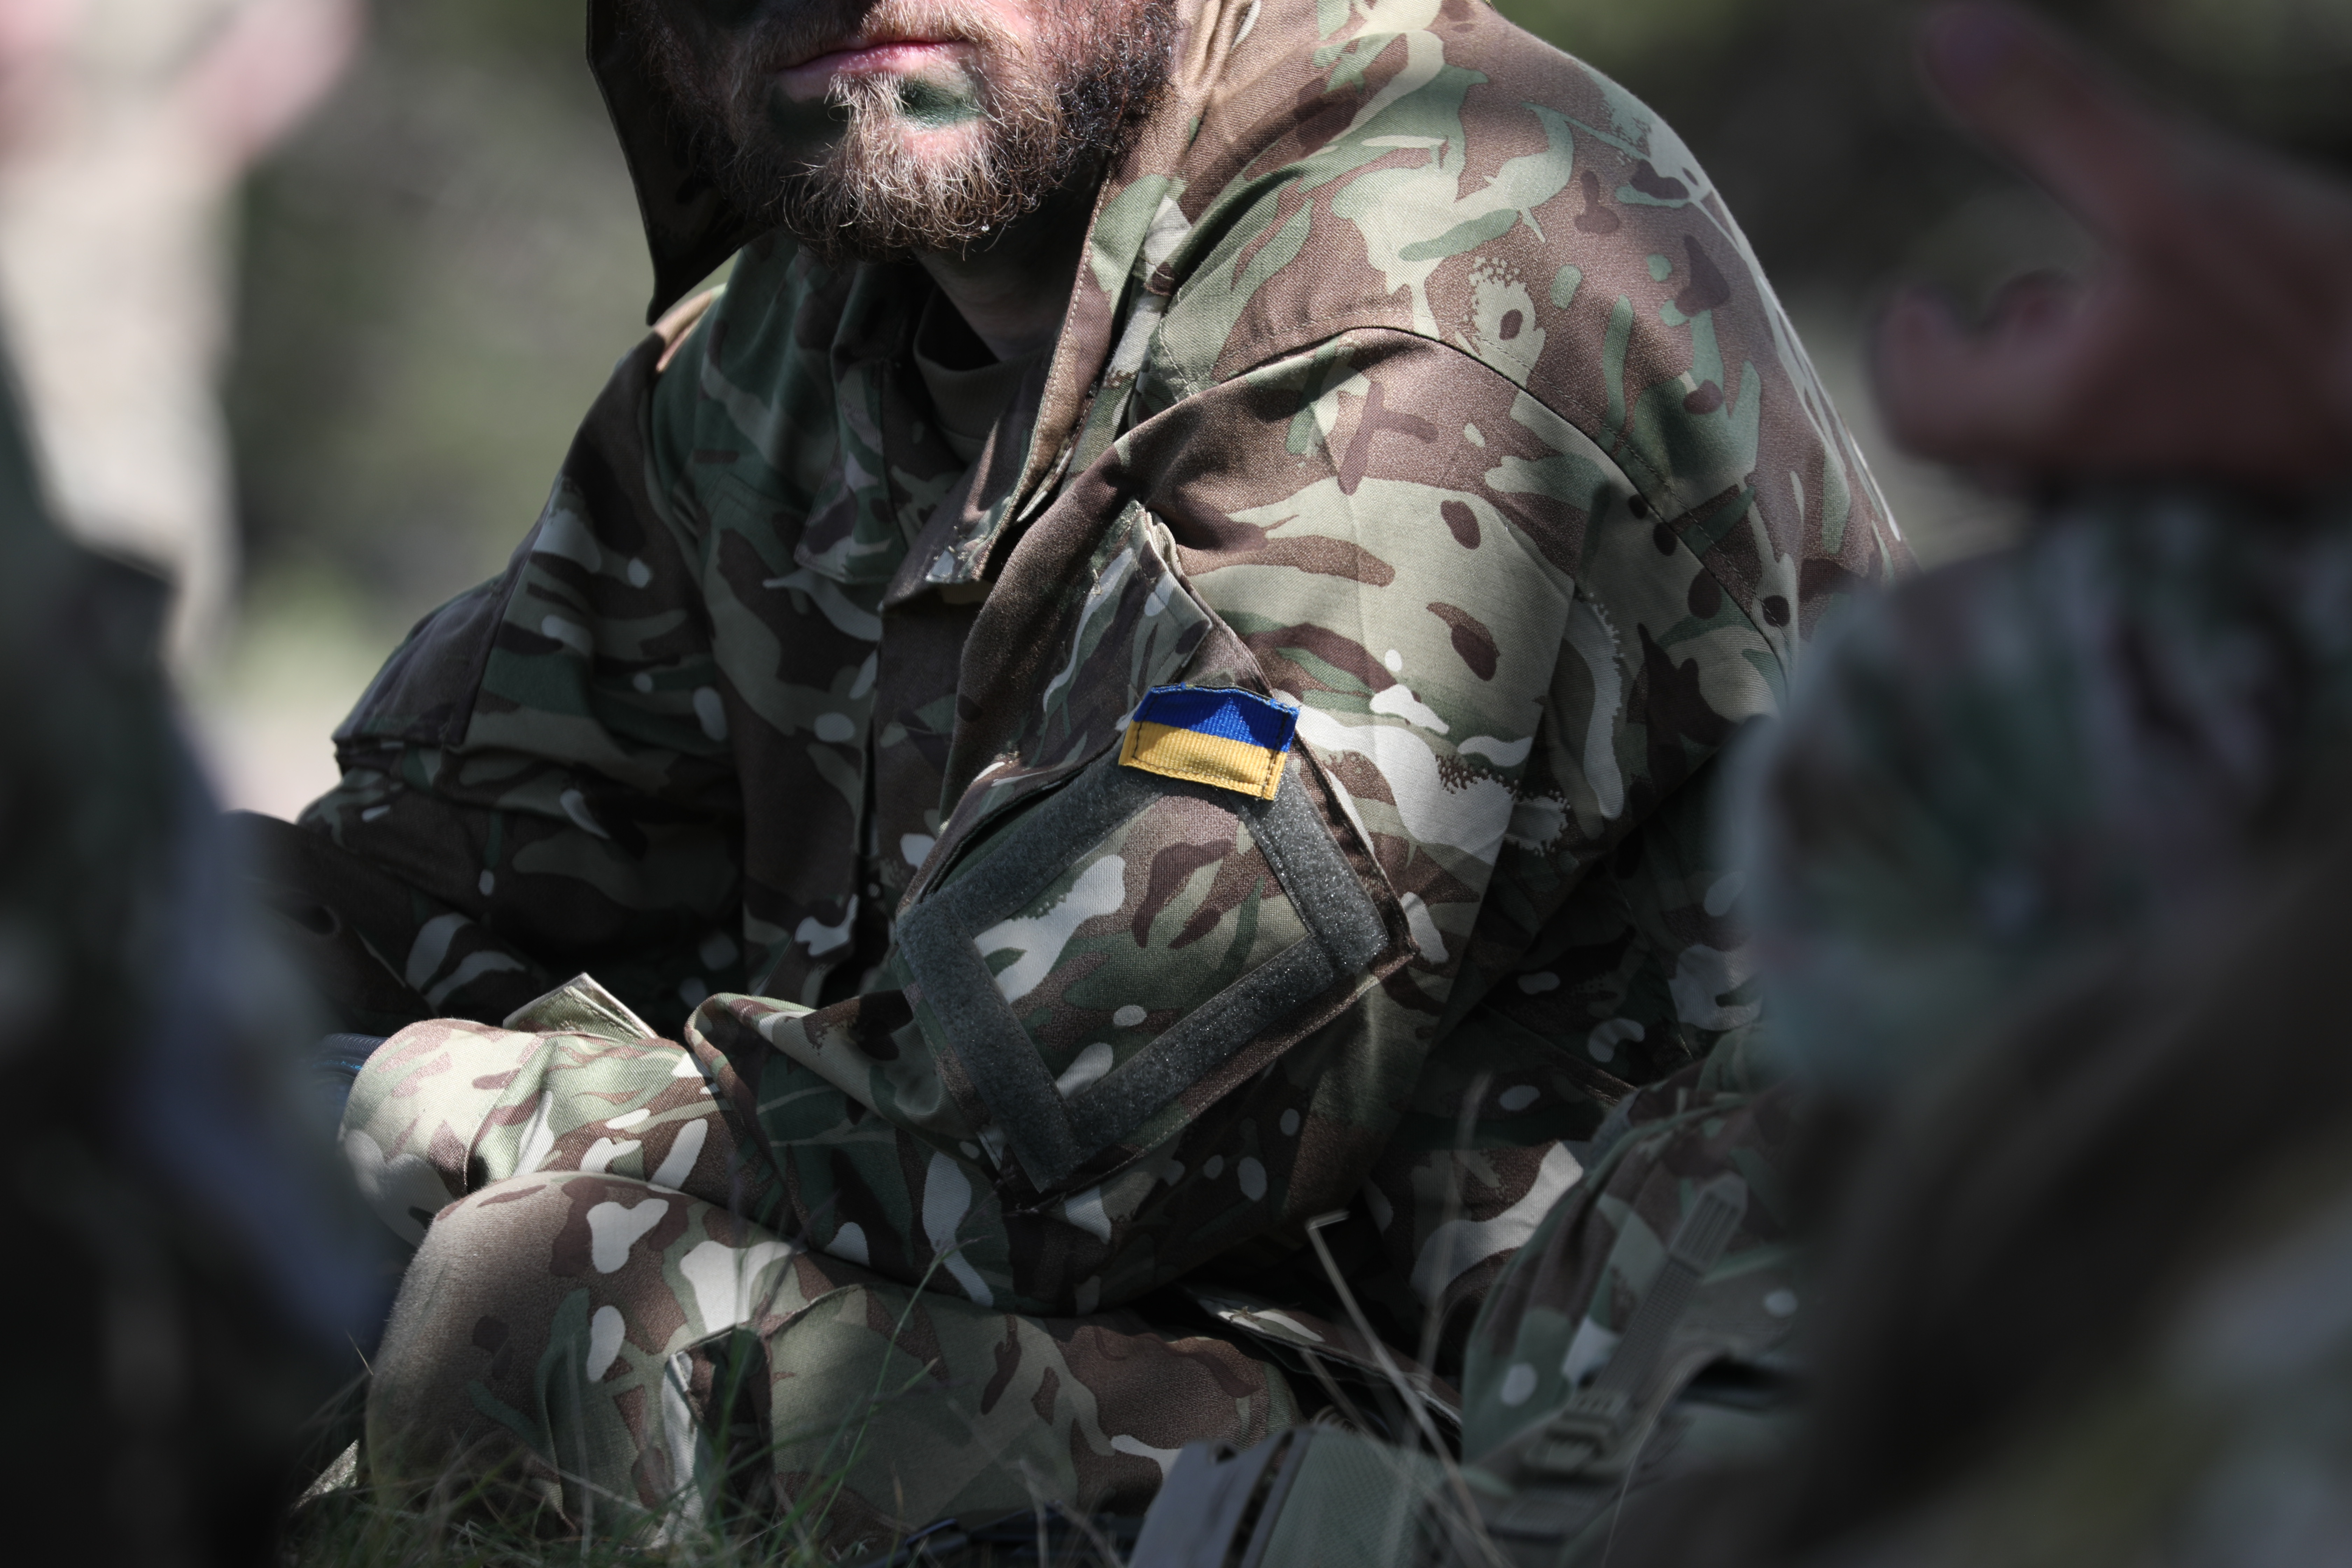 Image shows personnel with Ukrainian flag on shoulder. 